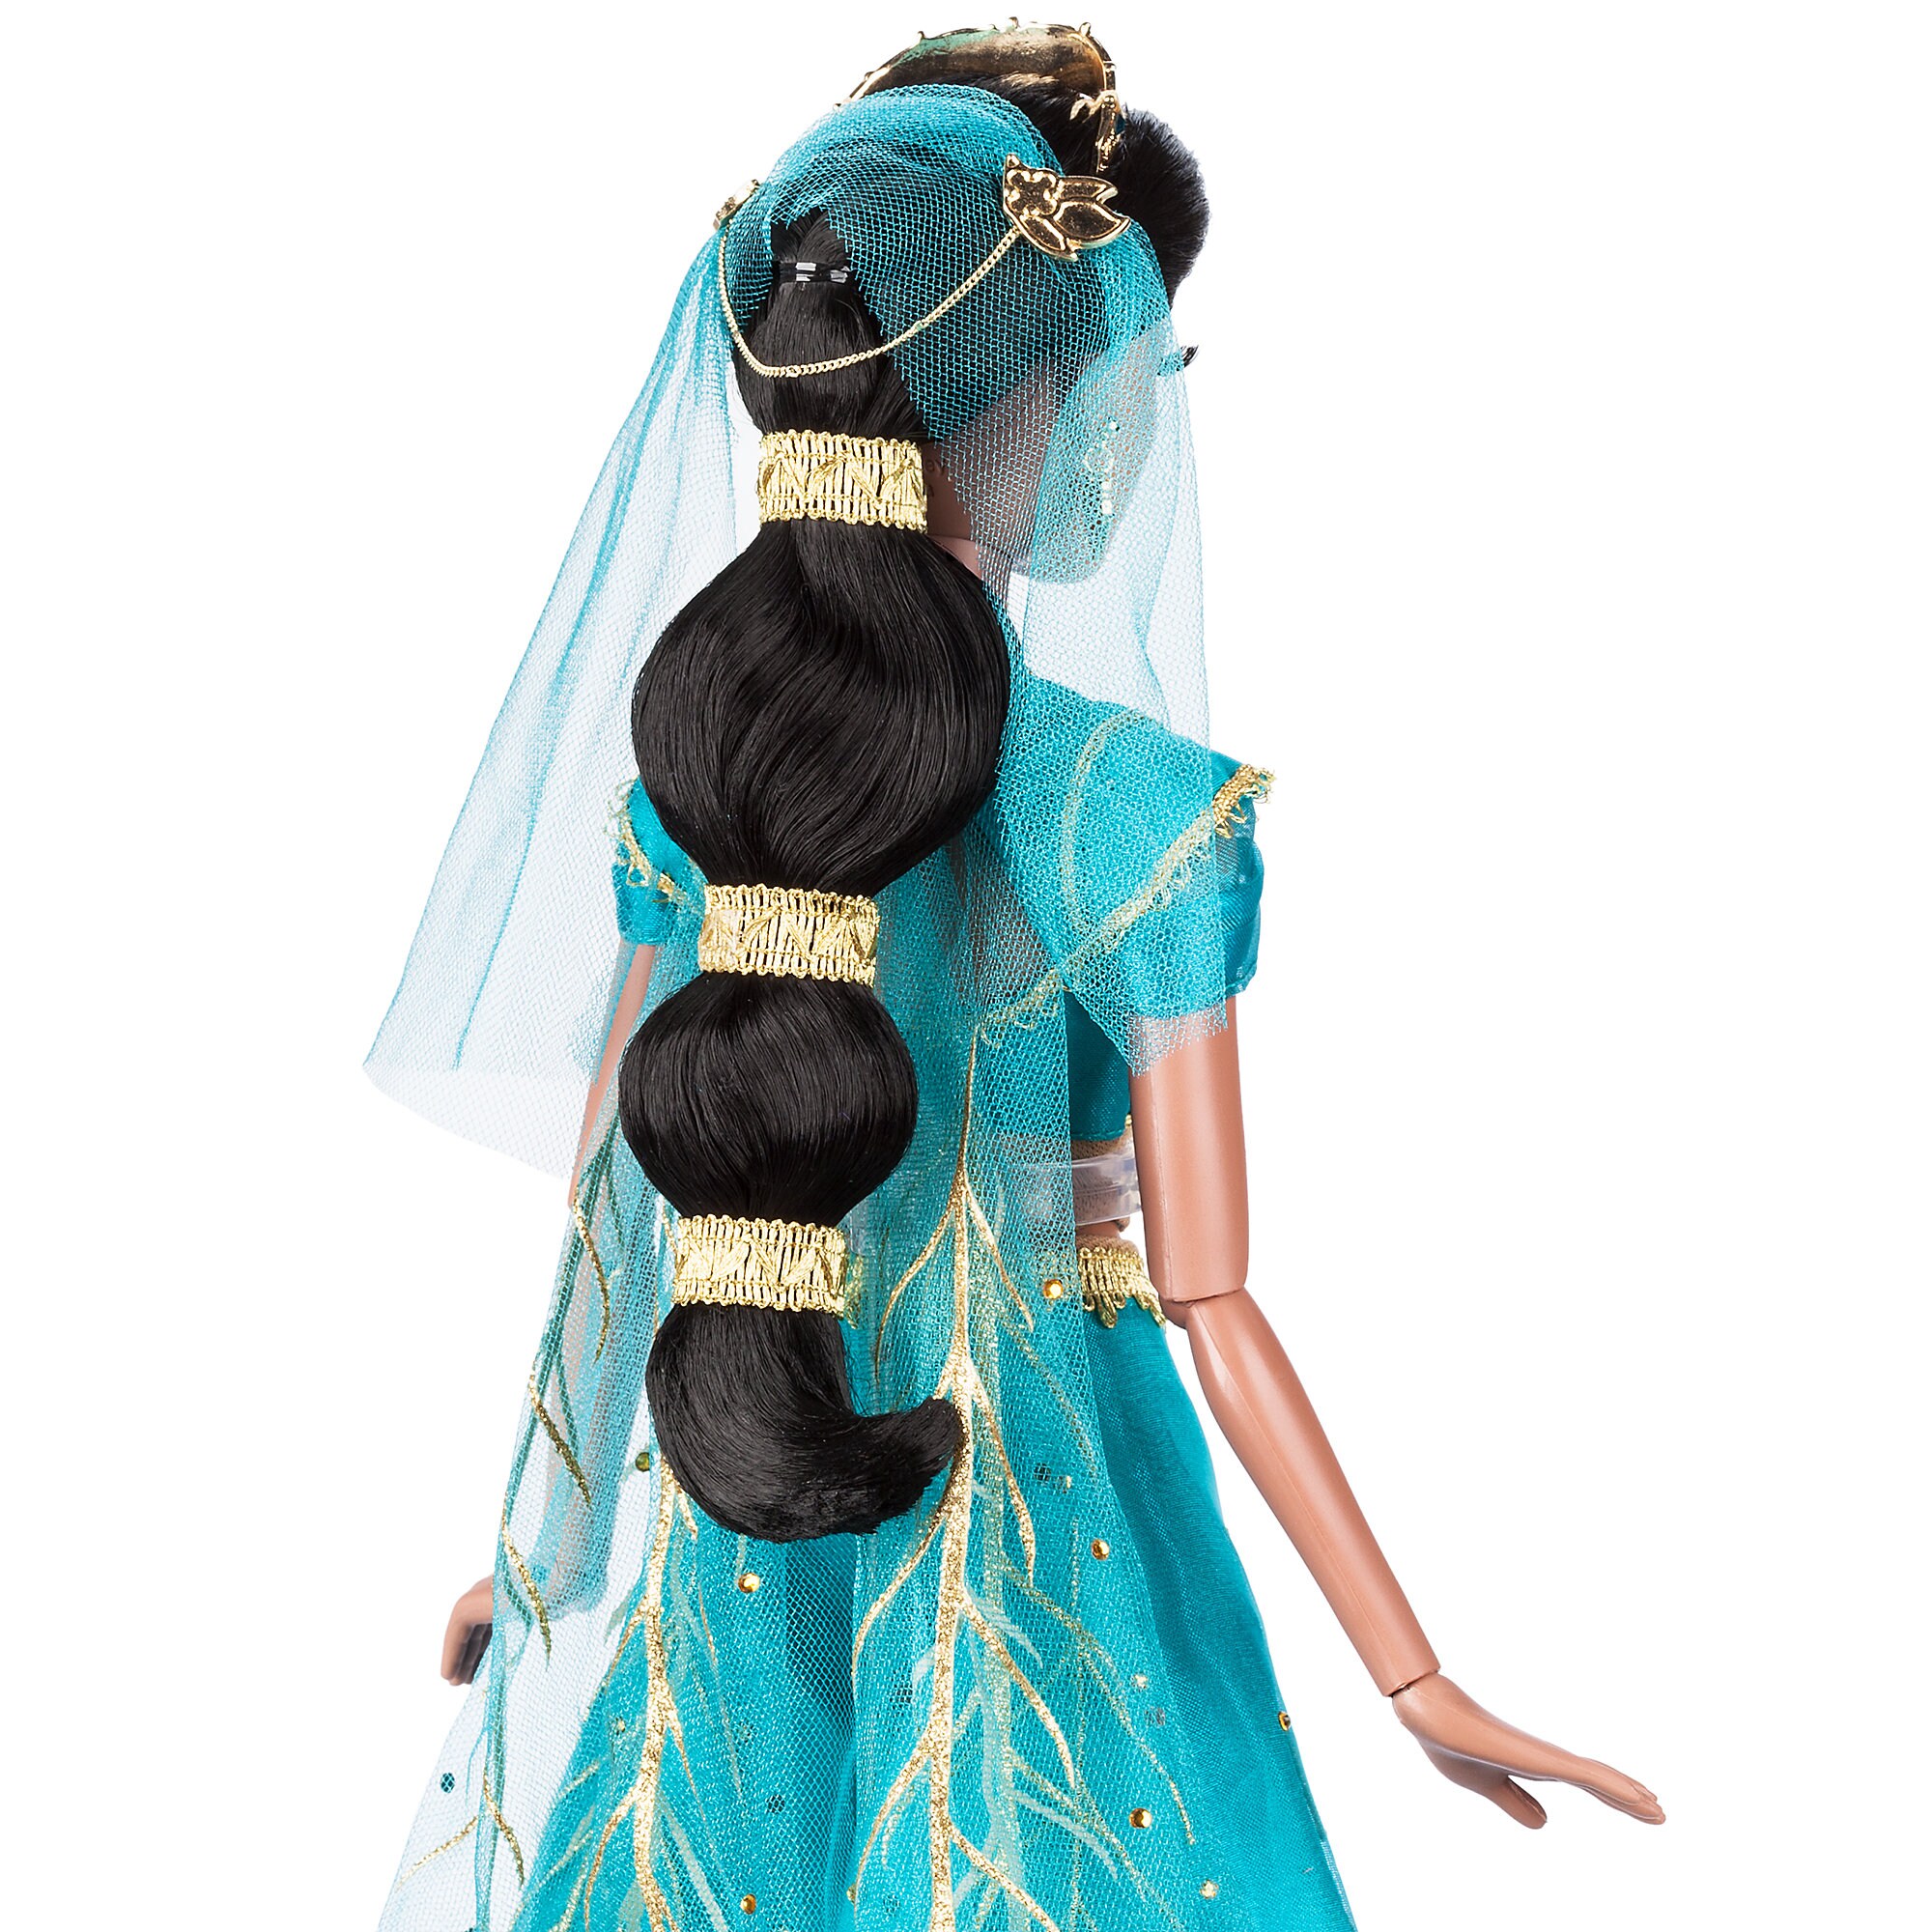 Jasmine Limited Edition Doll - Aladdin - Live Action Film - 17''